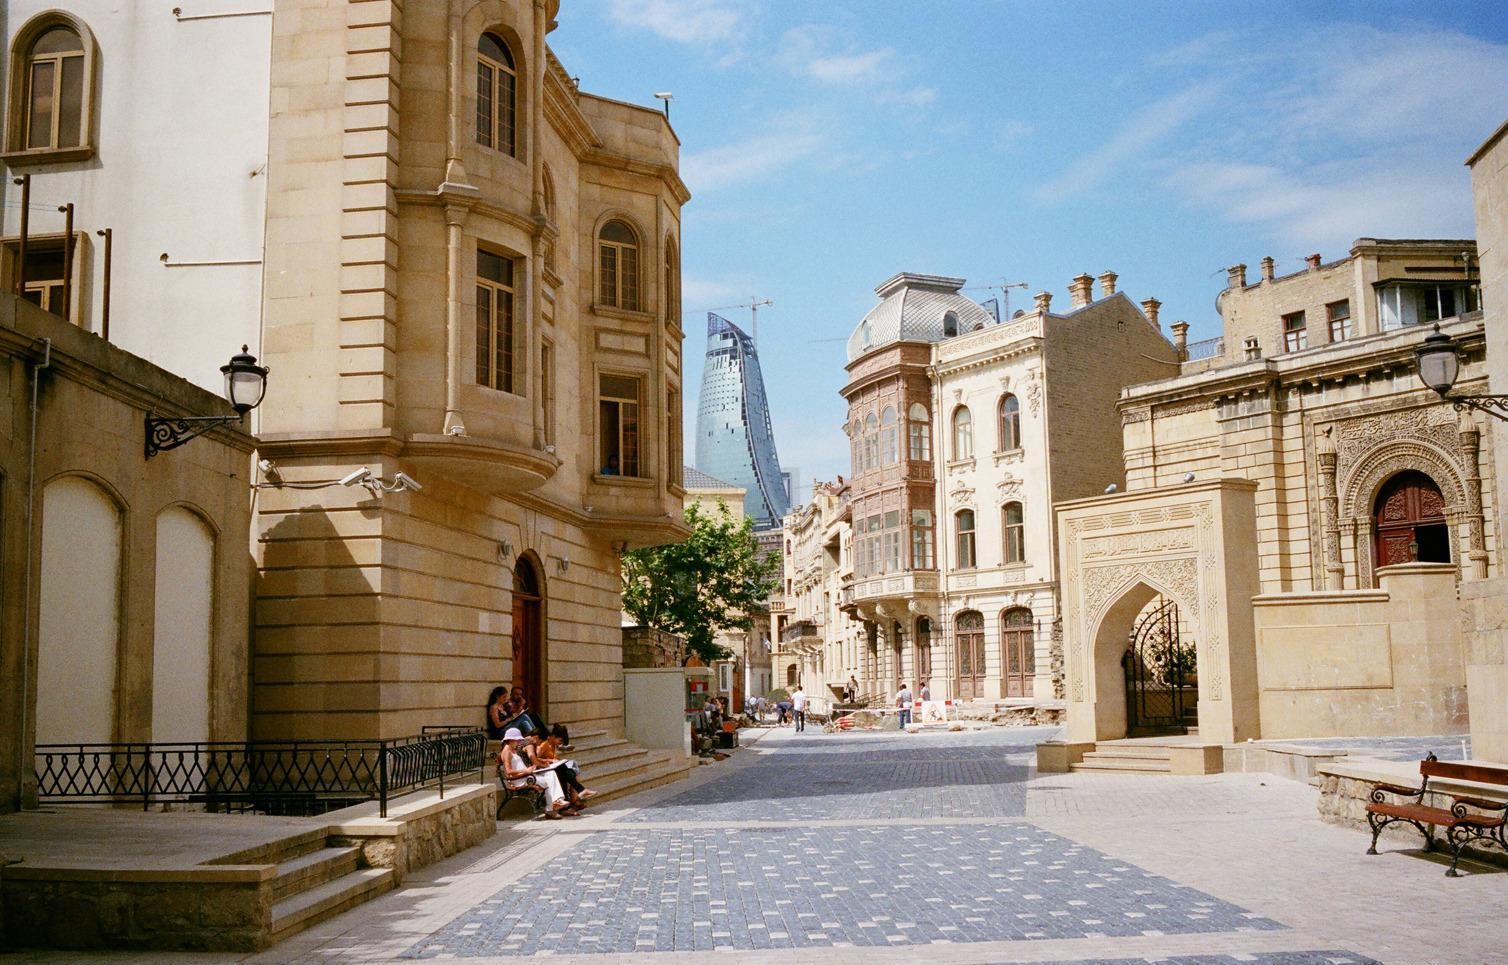 Why should you visit Baku